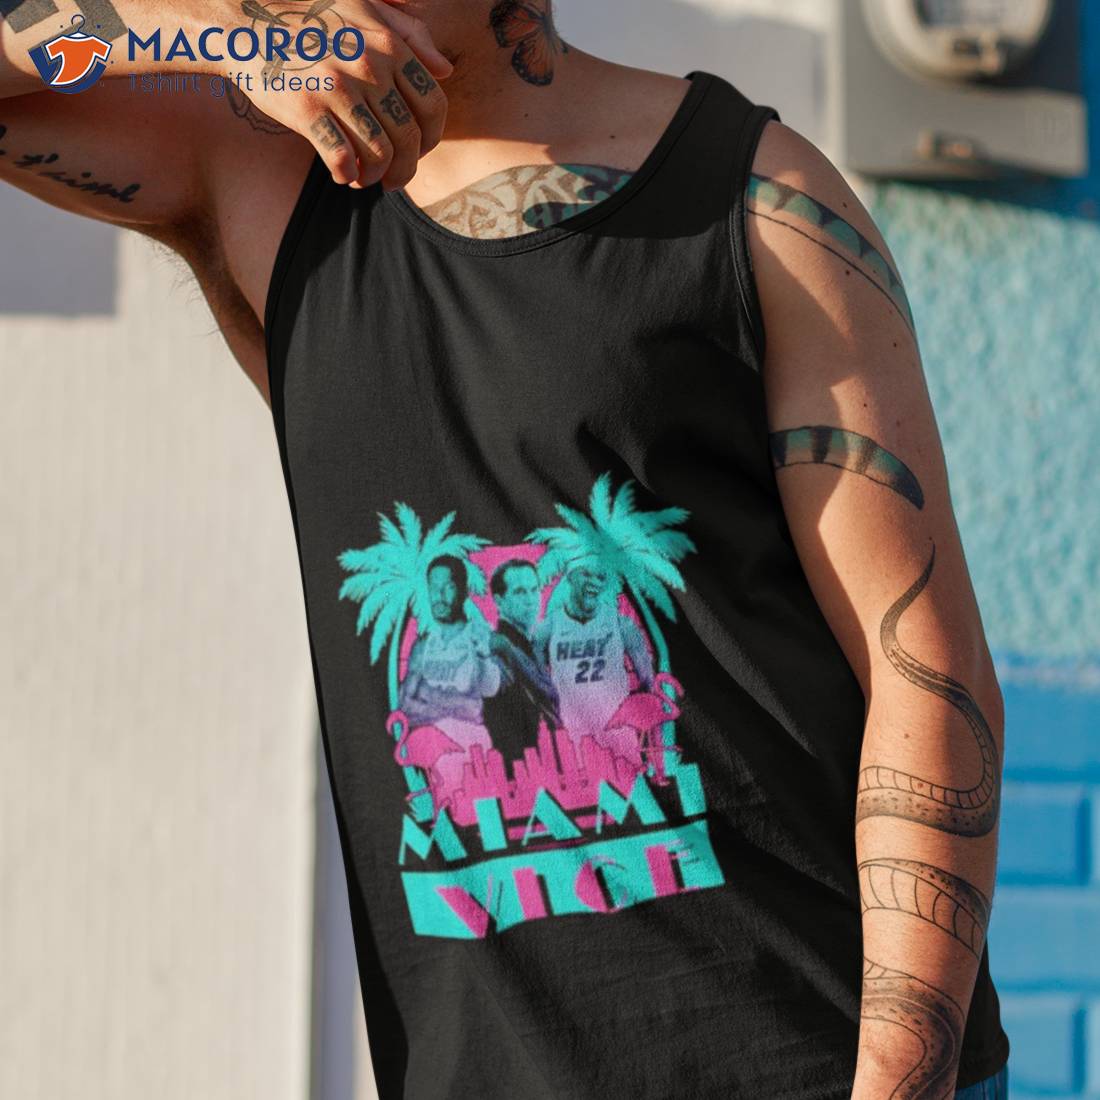 Miami Heat Vice T-Shirts, Hoodie, Tank